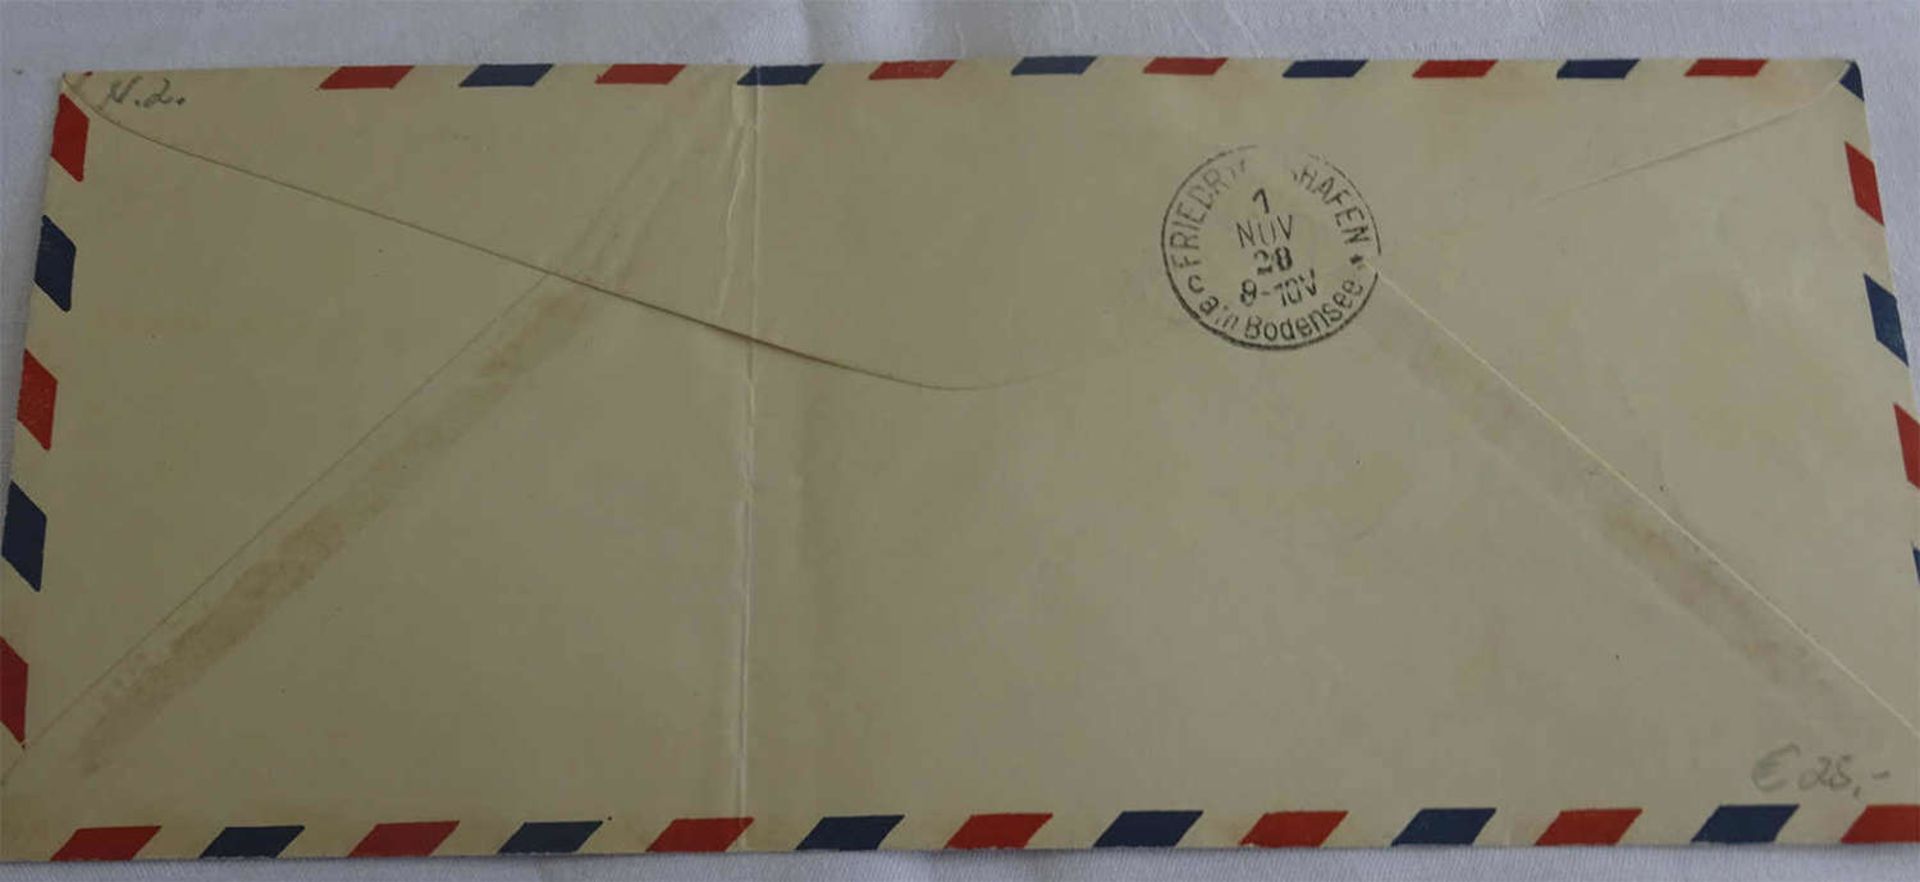 Zeppelinbrief Amerikafahrt 1928 (Rückfahrt) mit guter Frankatur, 50 Cent. u.a. Sieger 22BZeppelin - Bild 2 aus 2